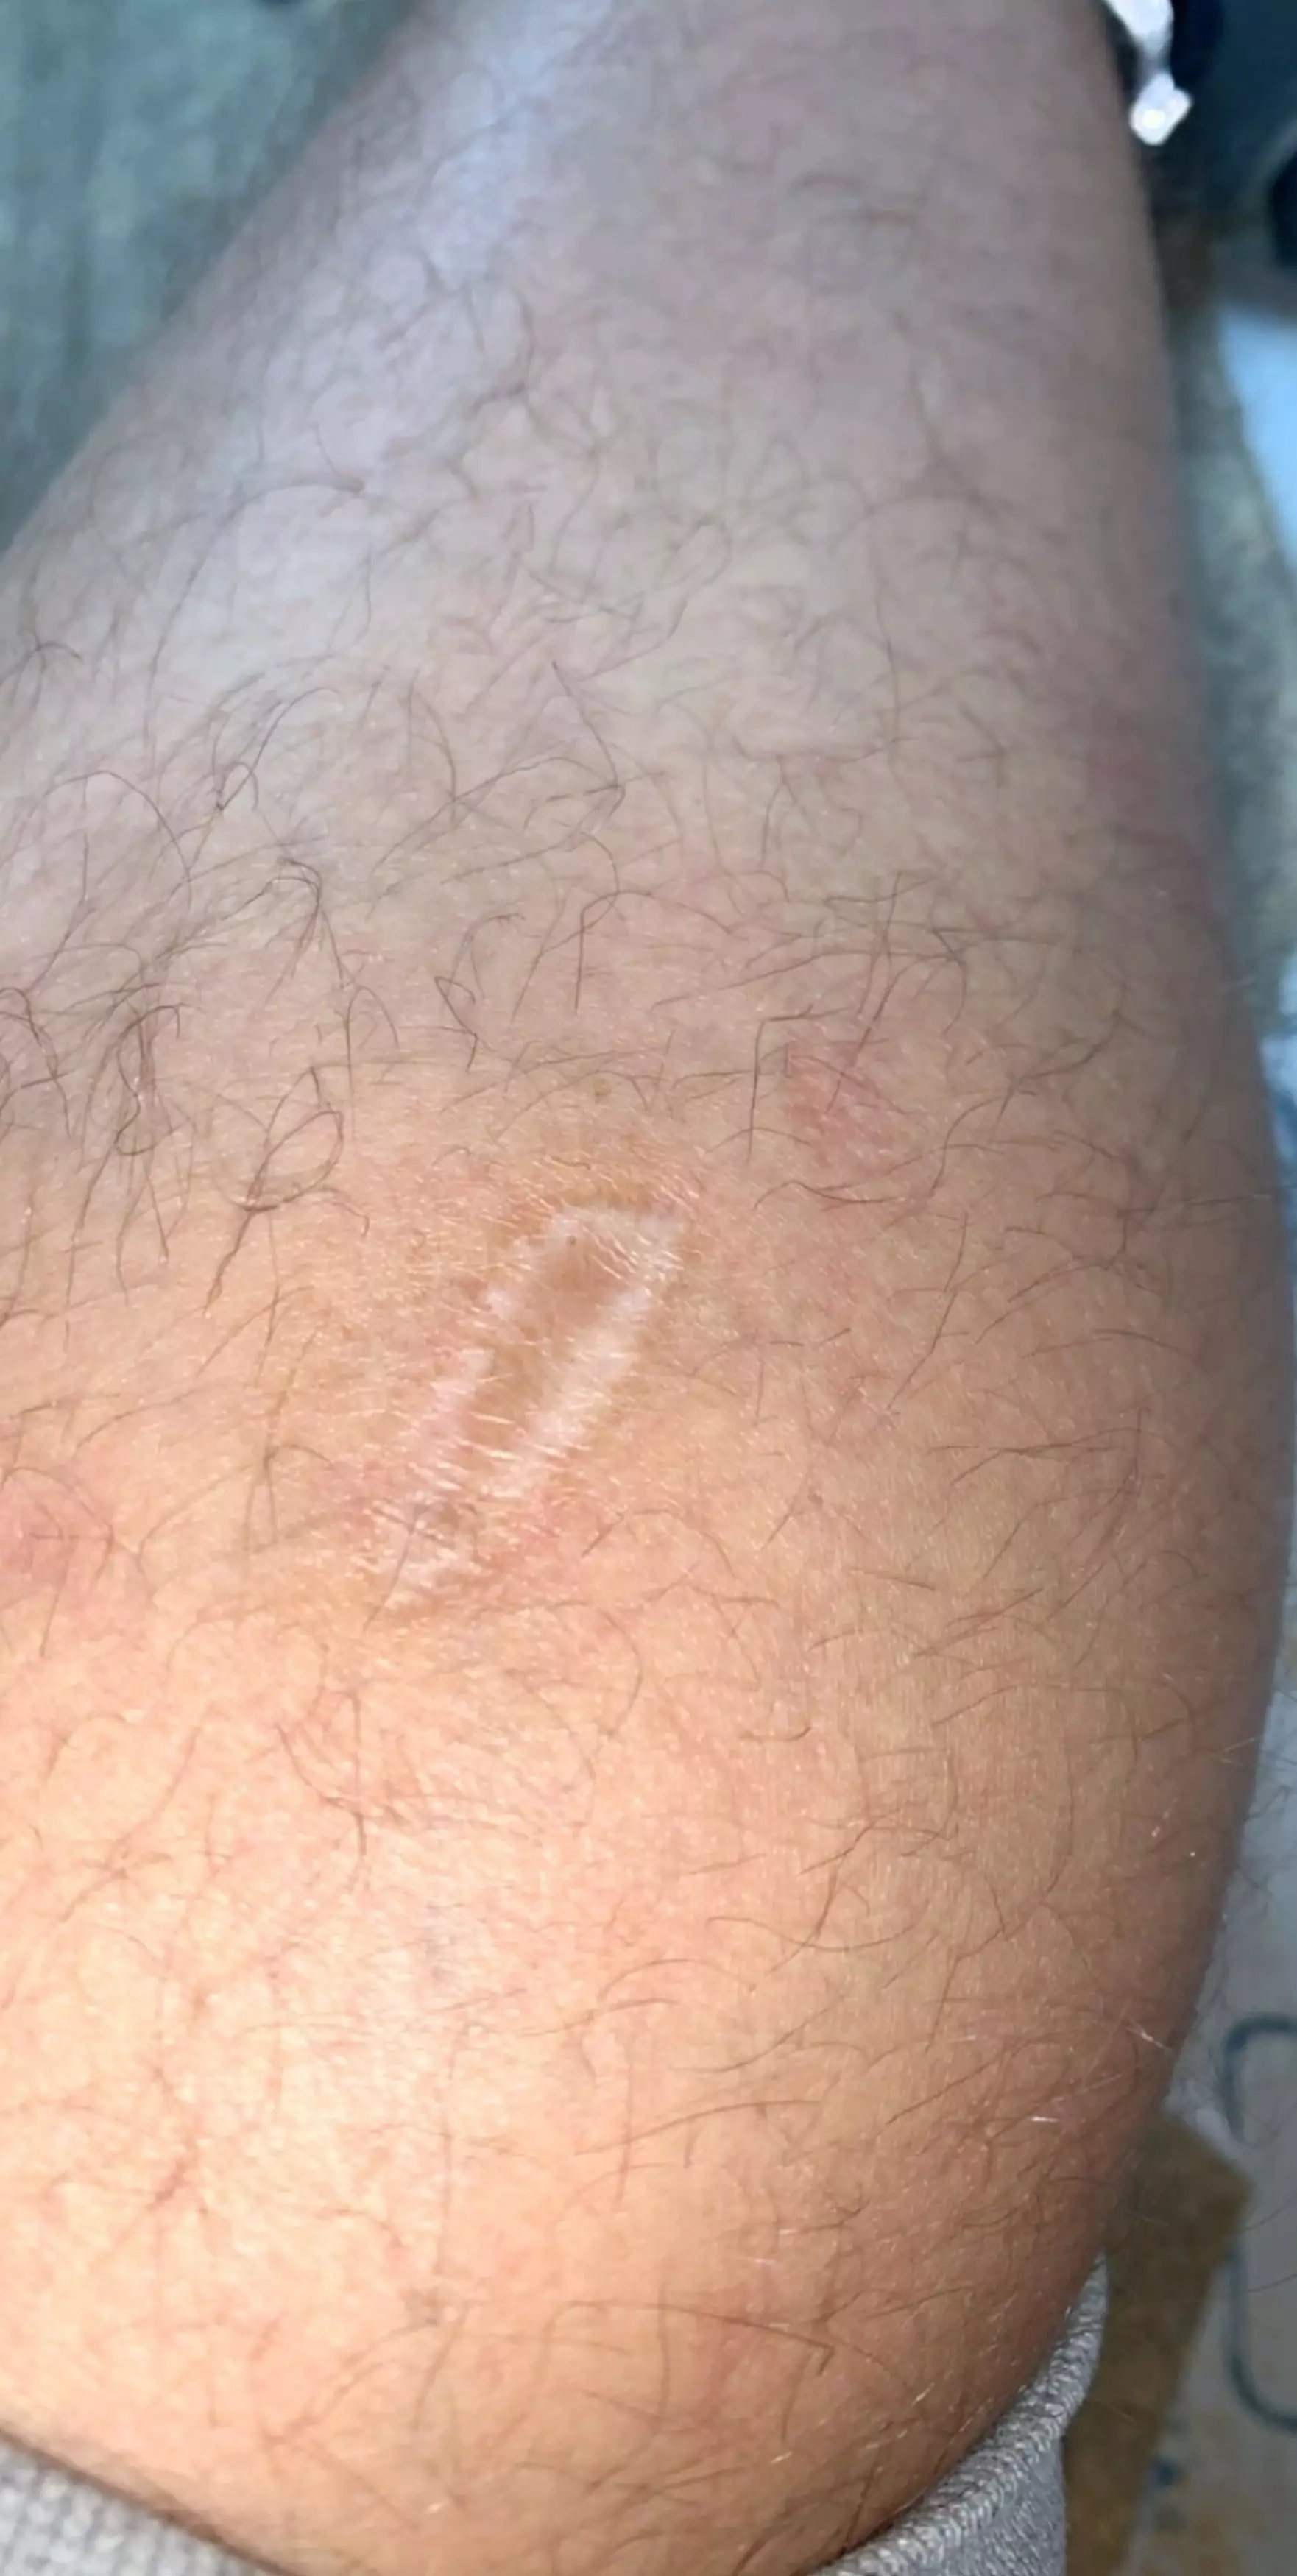 Christopher still has a scar following surgery.